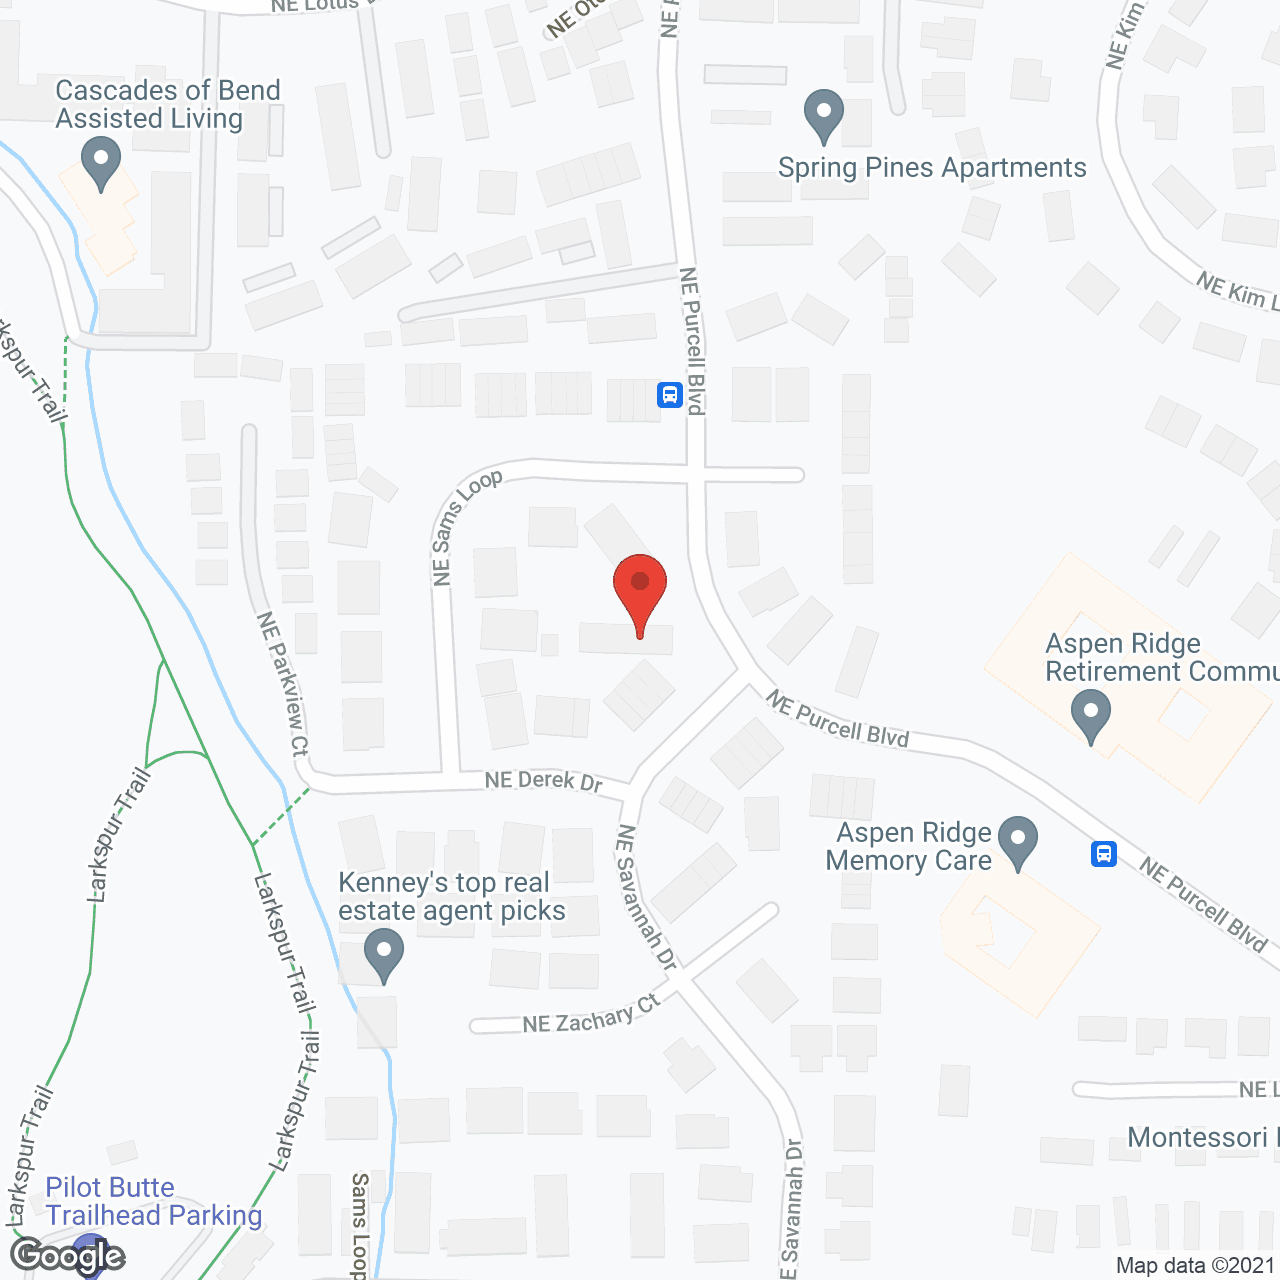 Pilot Butte Village in google map